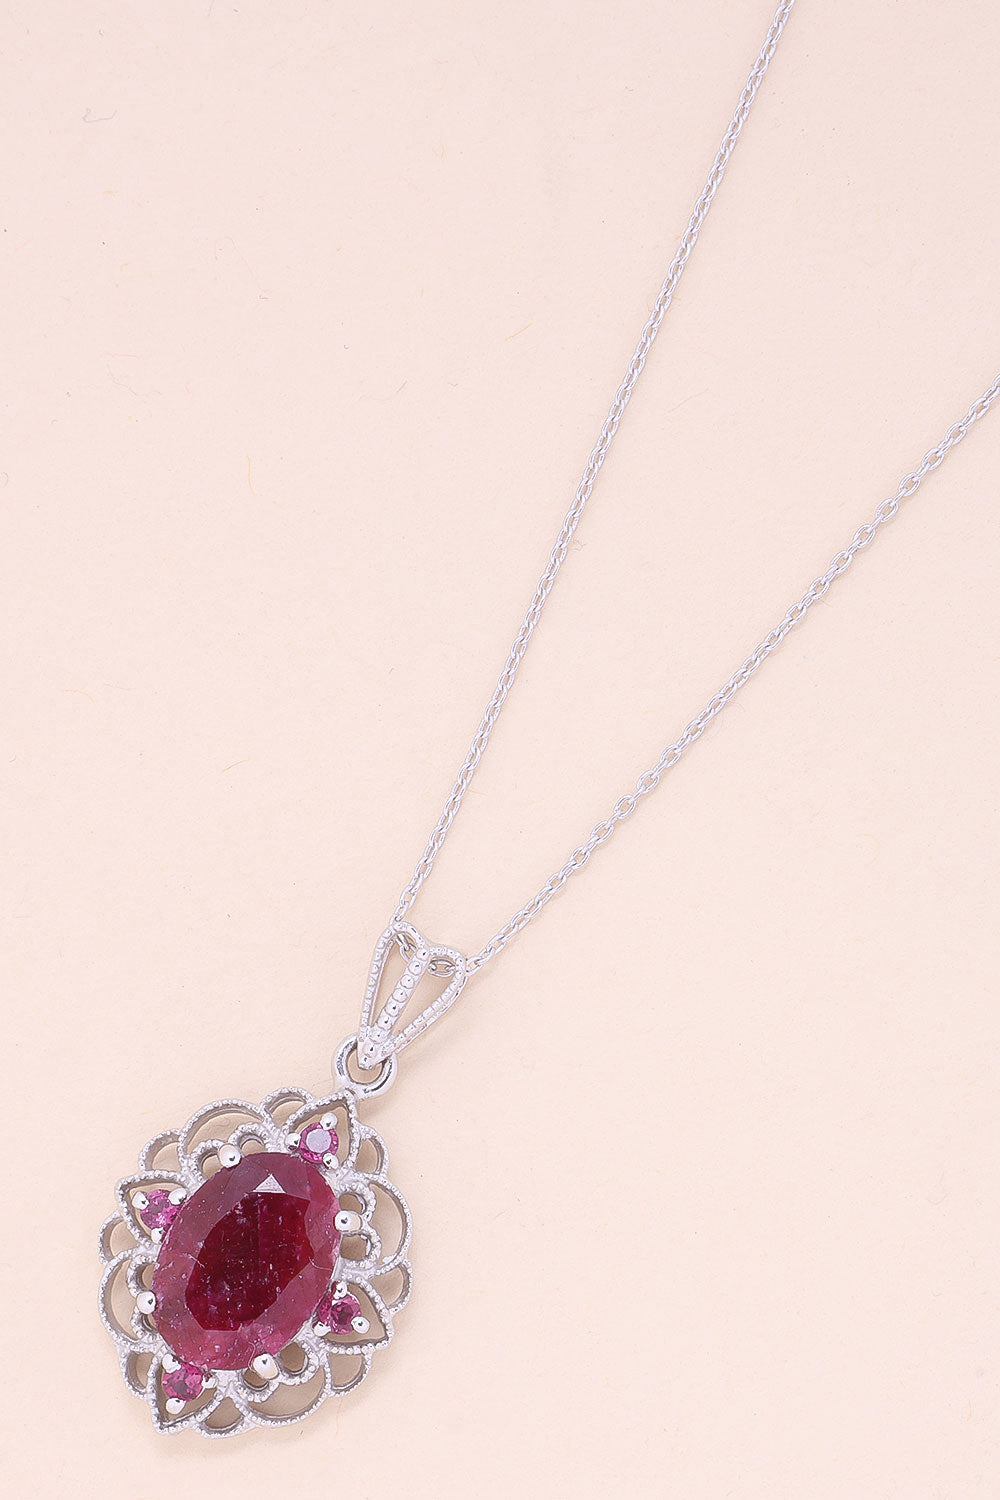 Ruby And Rhodolite Silver Necklace Pendant Chain 10067182 - Avishya